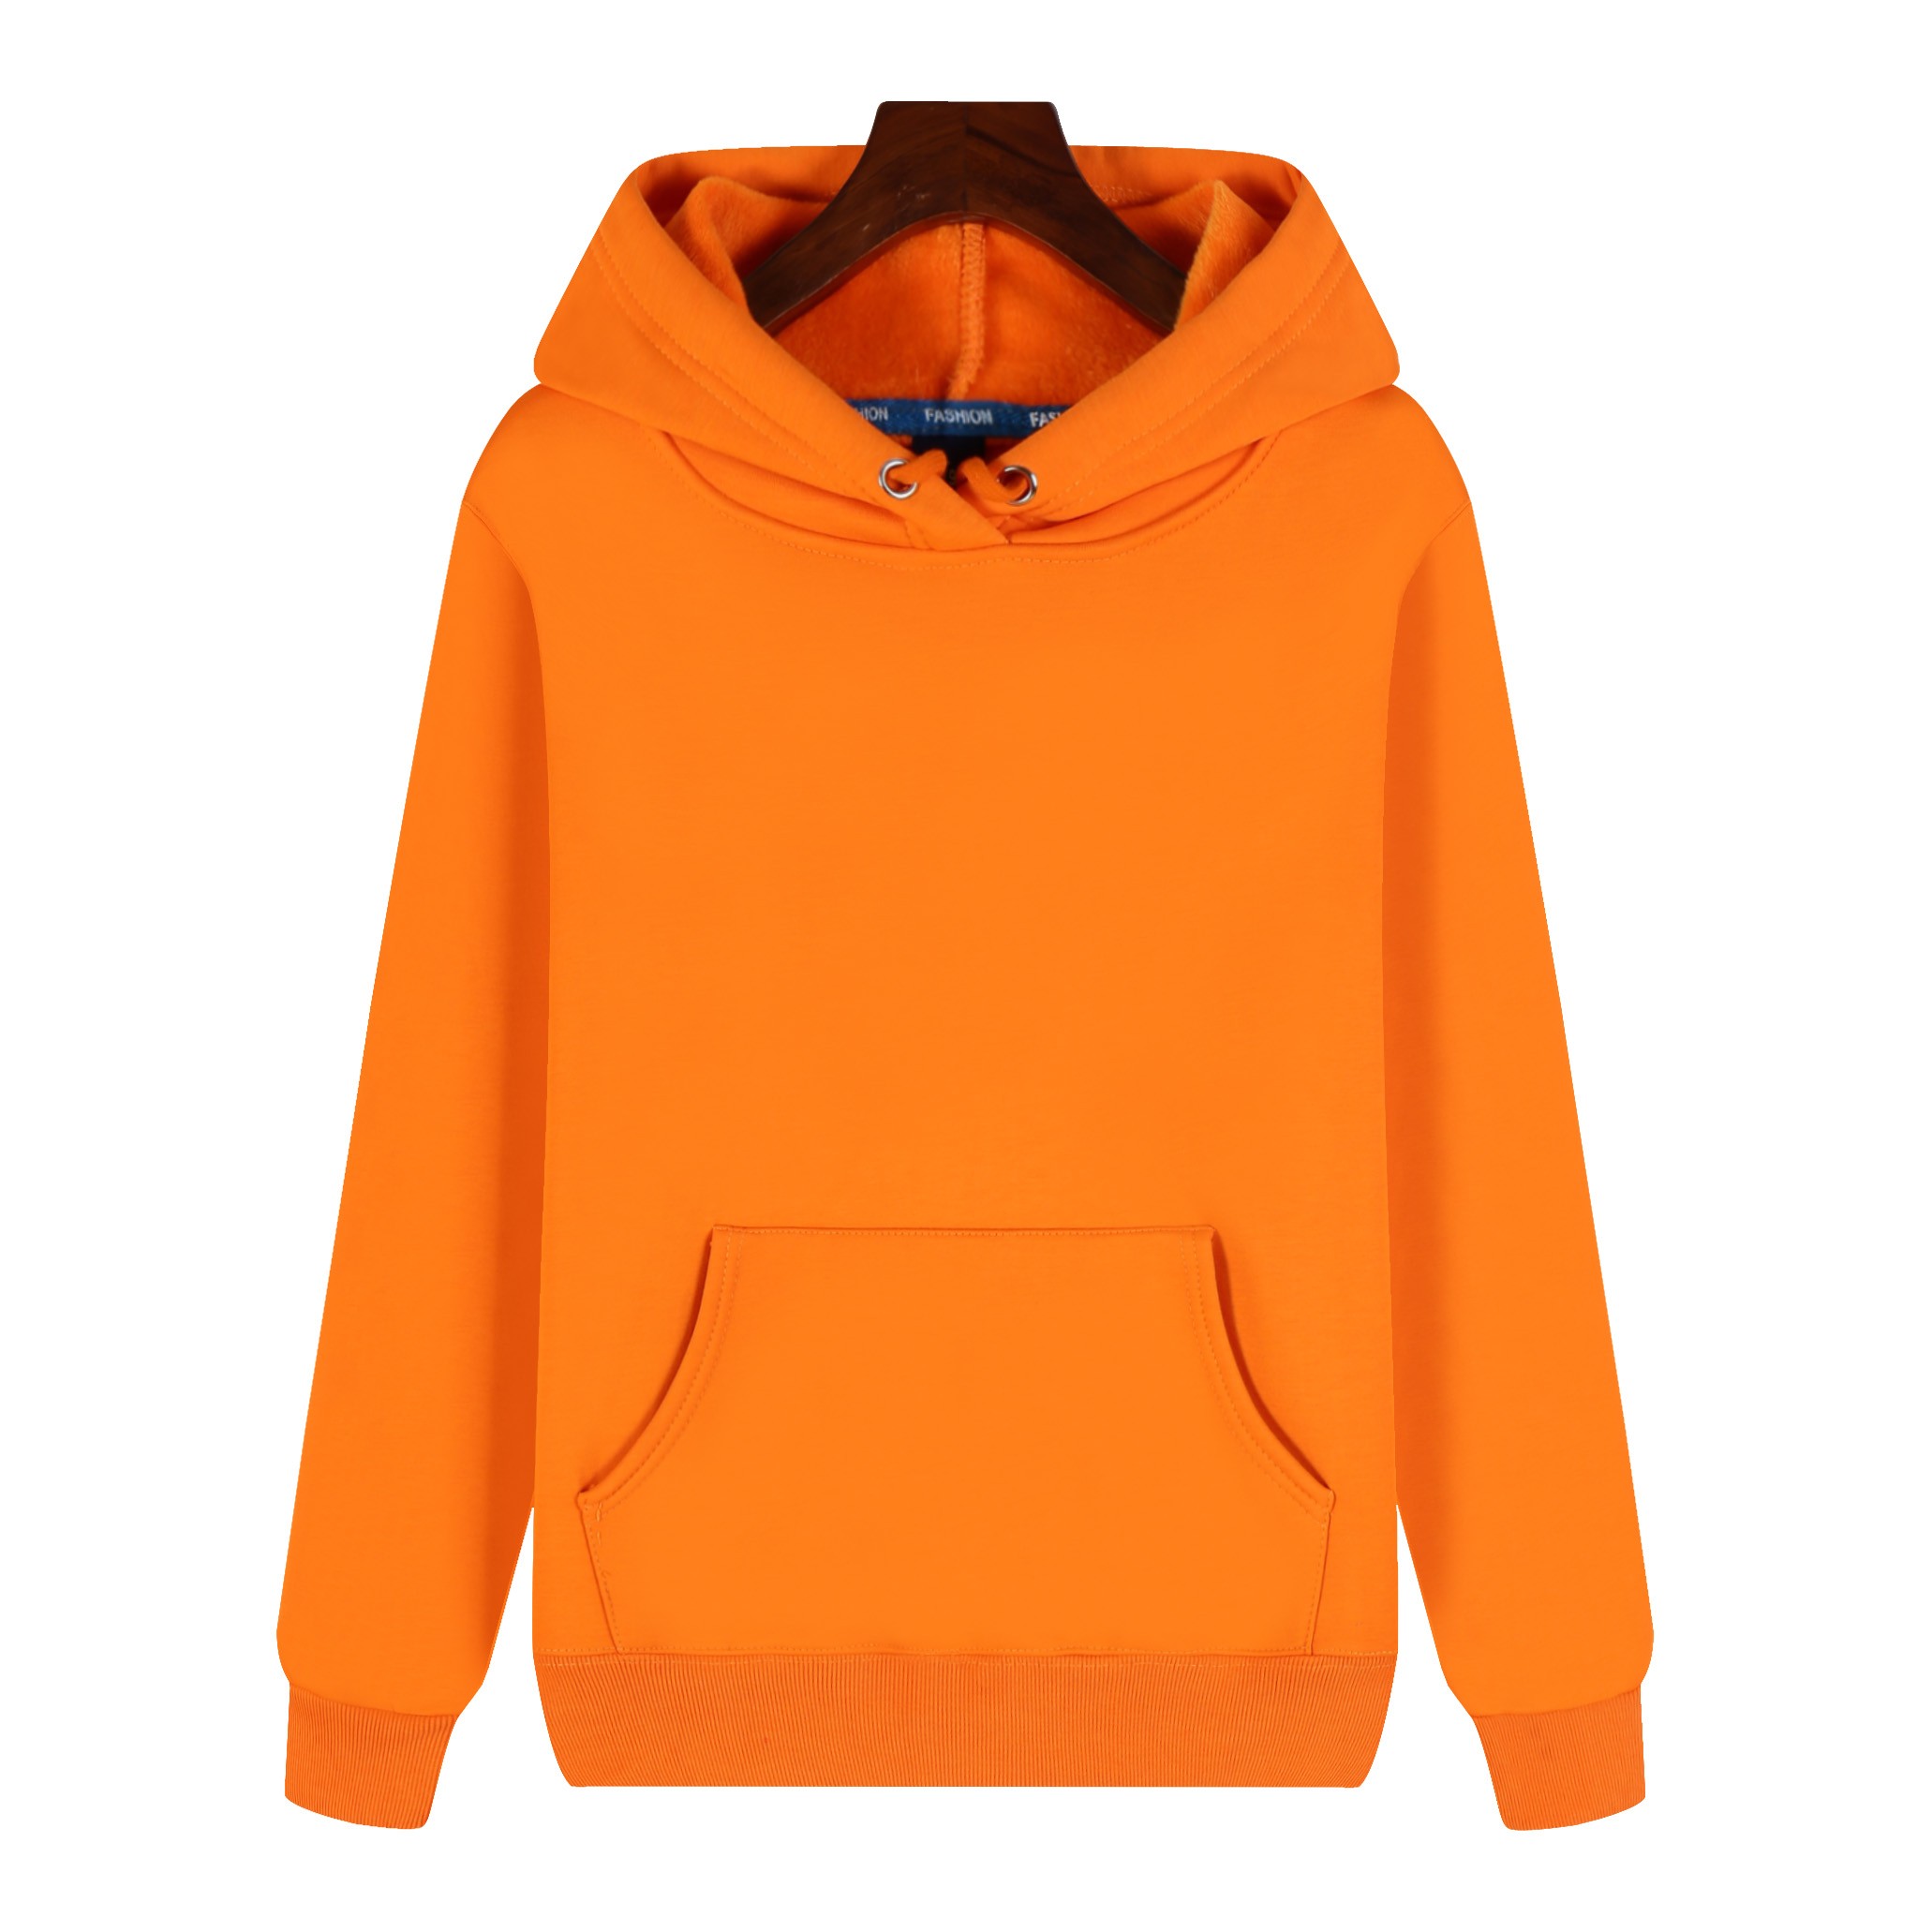 Custom designed logo womens hoodies sweatshirts with great quality control